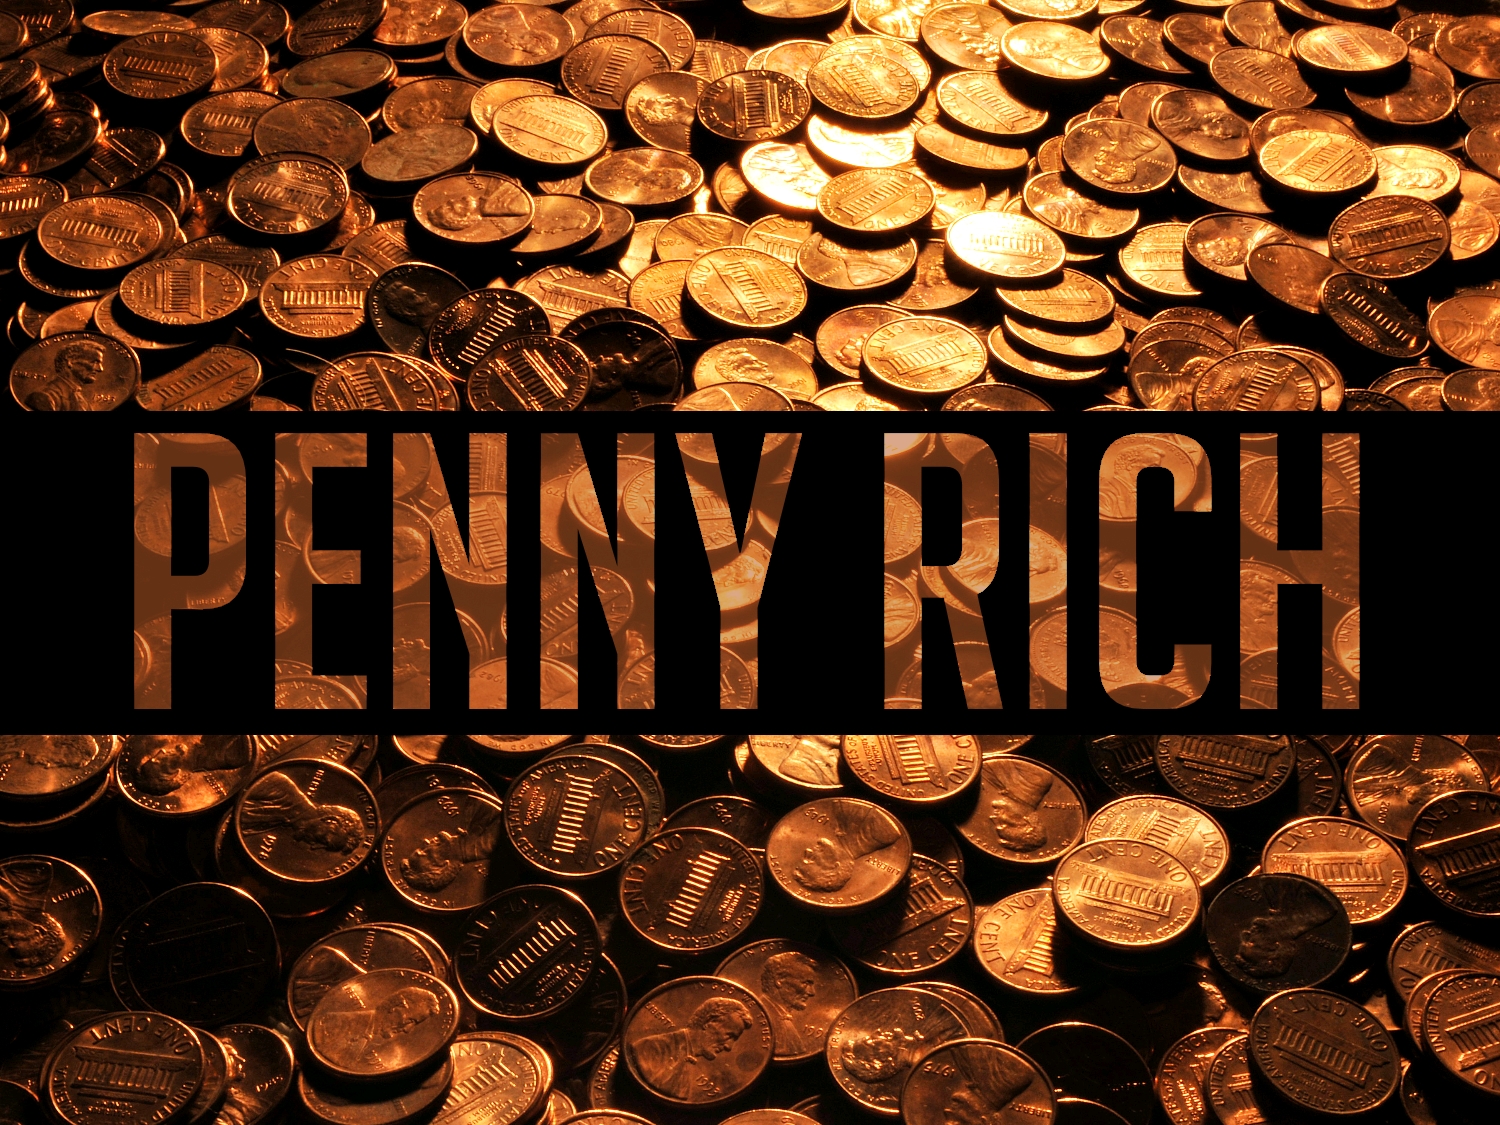 Penny Rich.jpg